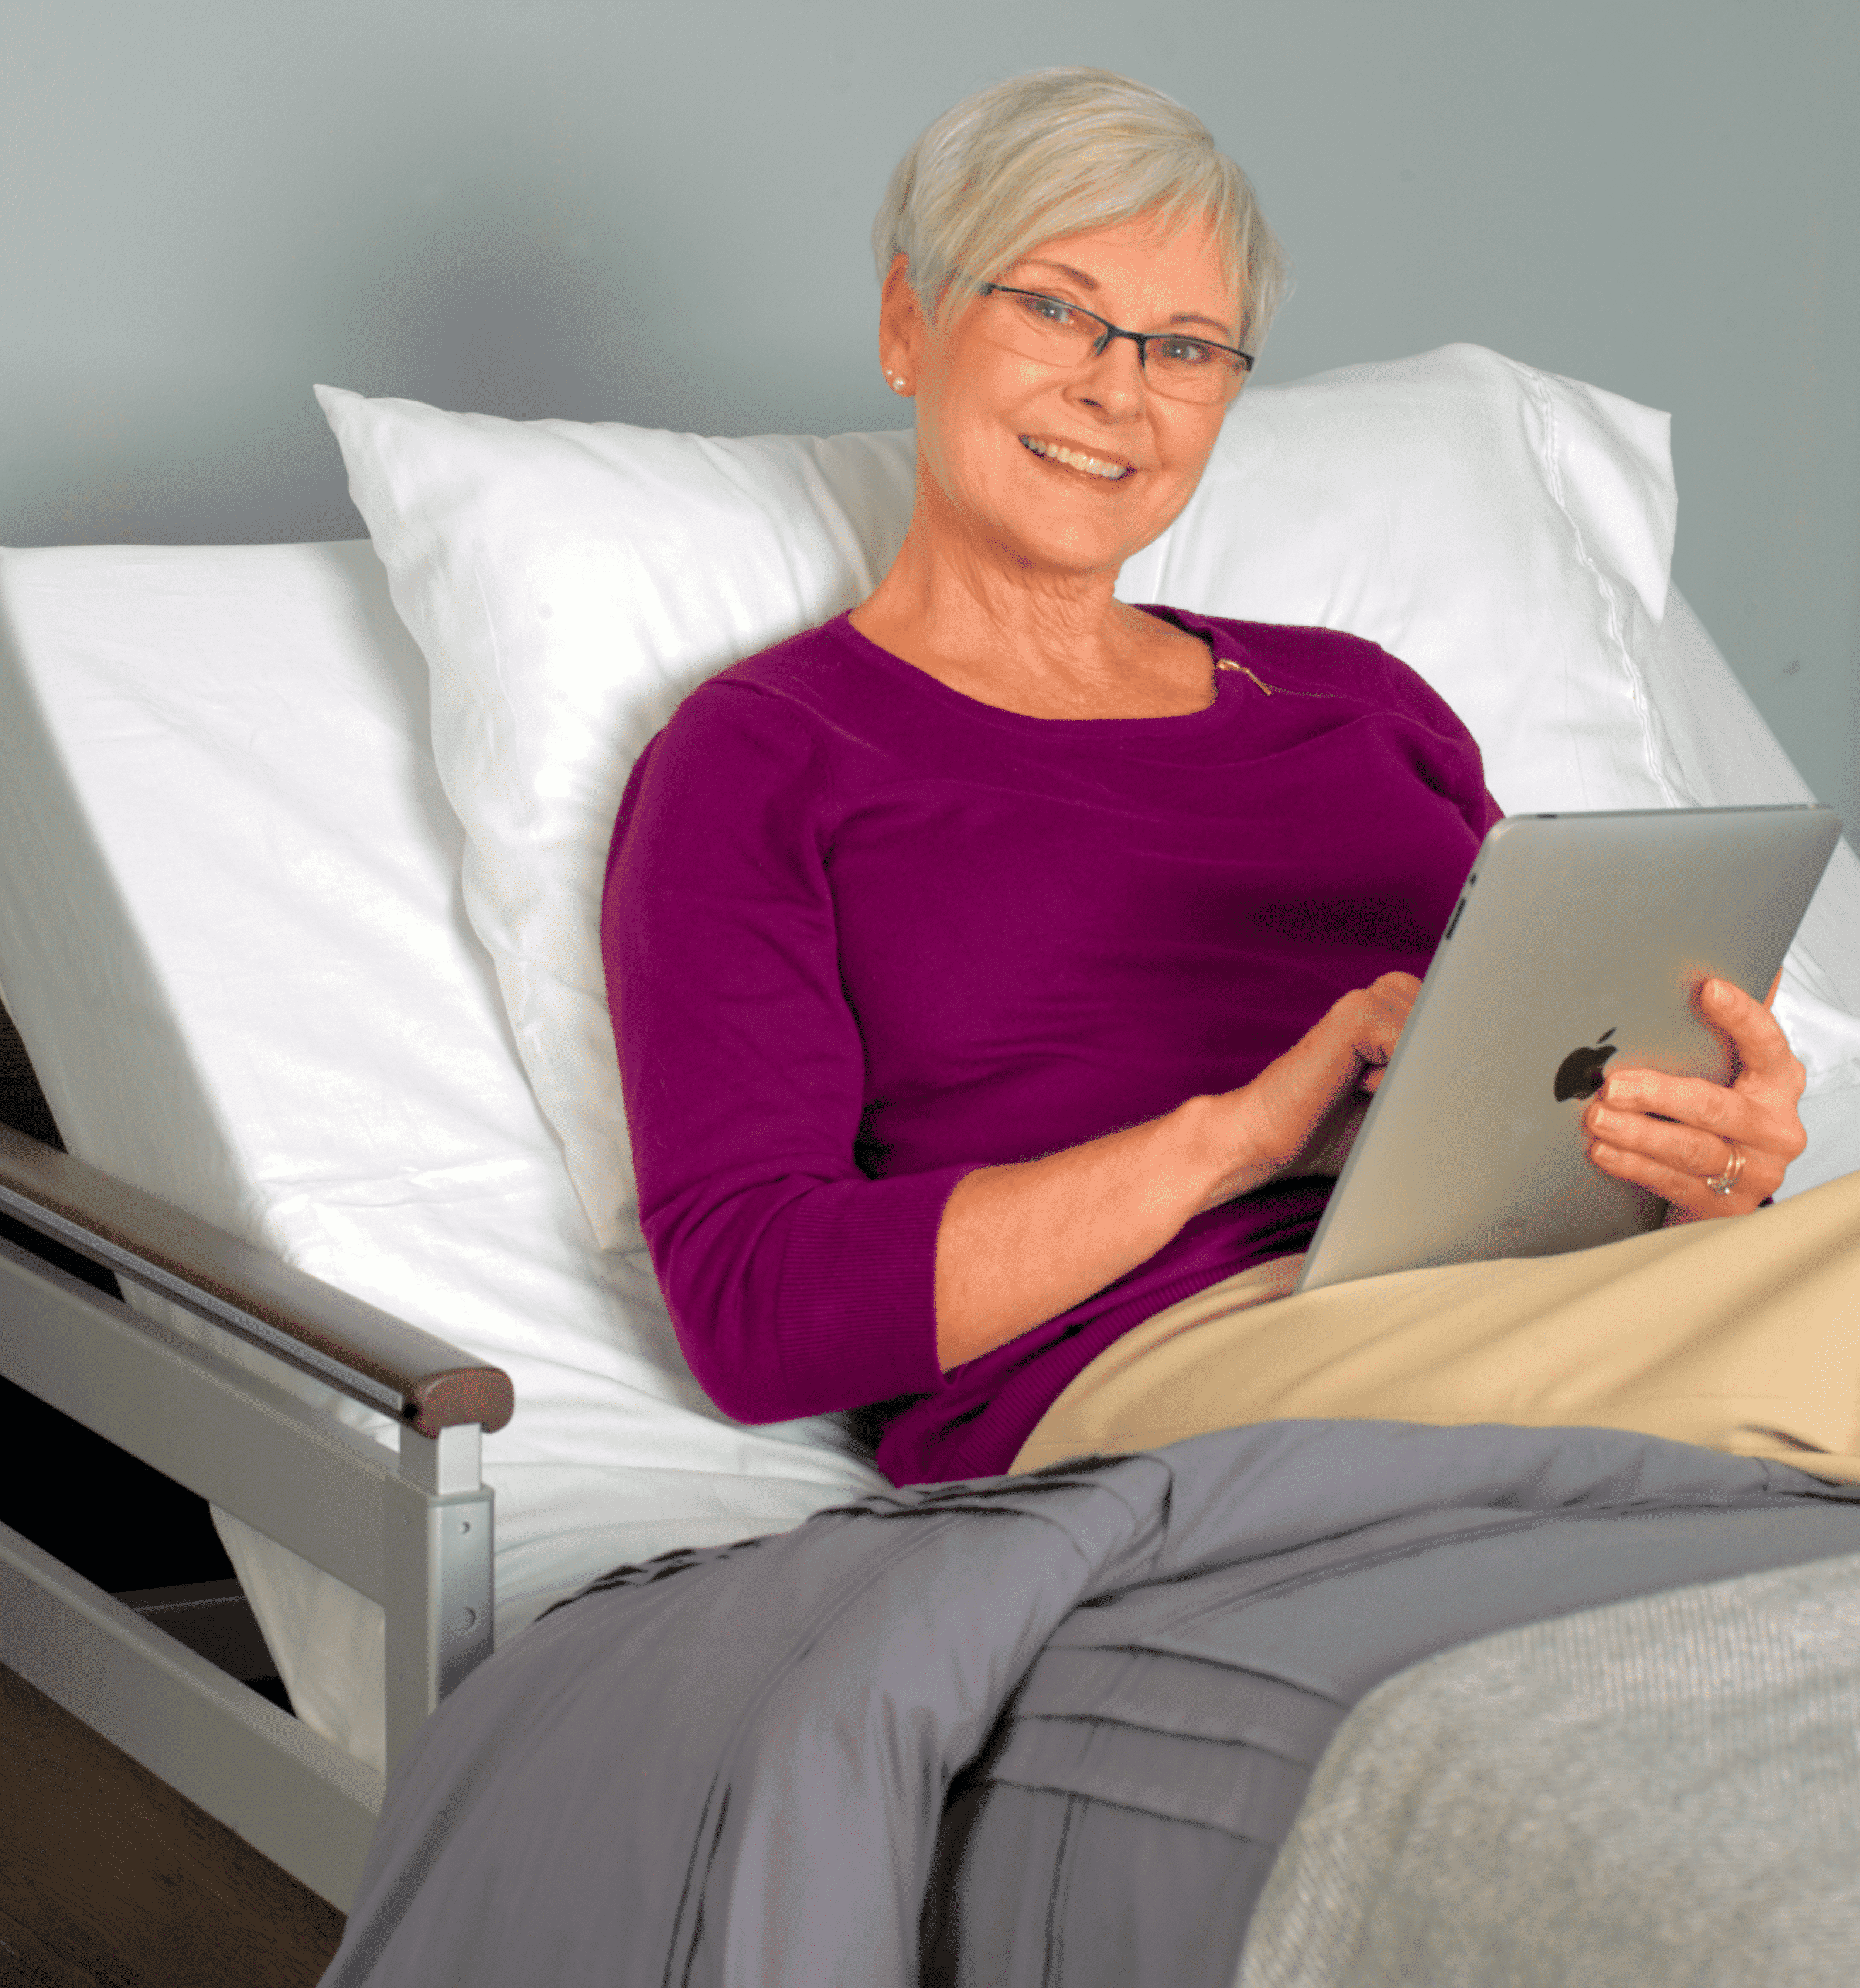 wide luxury hospital bed SonderCare Aura™ Platinum Wide Hospital Bed – Wide Luxury Hospital Bed – Large Upholstered Hospital Bed